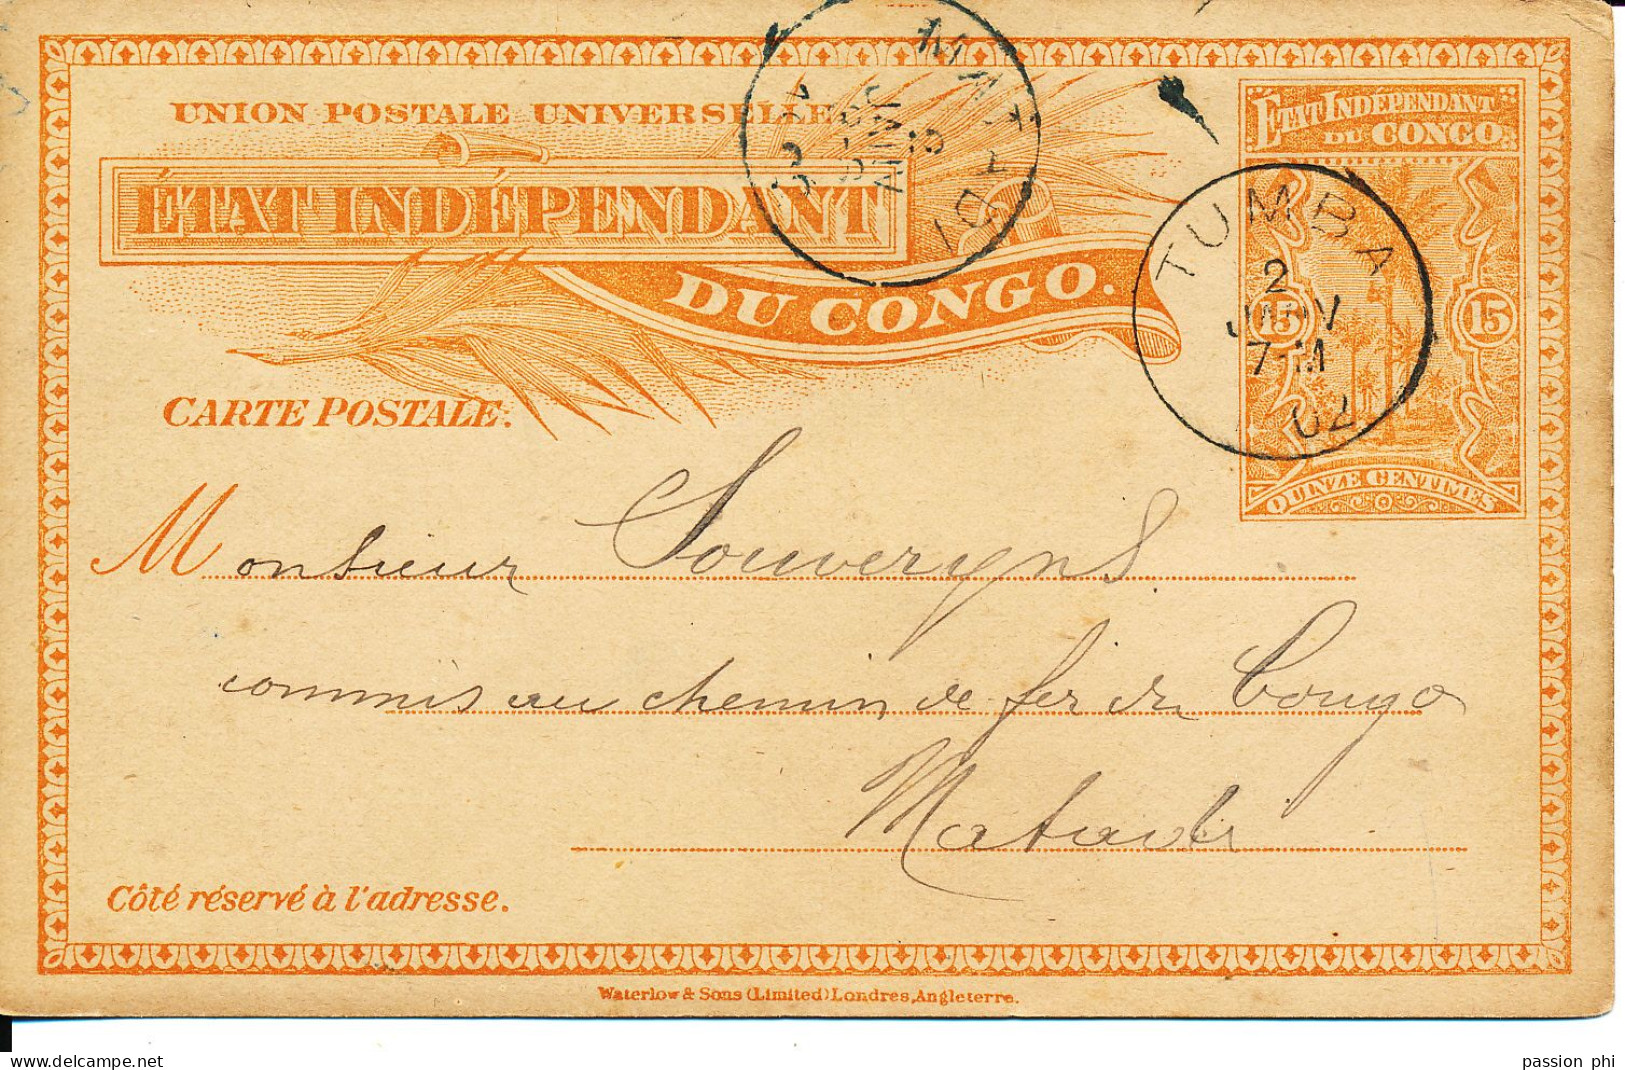 BELGIAN CONGO  PS SBEP 15 INLAND FROM TUMBA 02.01.1902 TO MATADI - Stamped Stationery